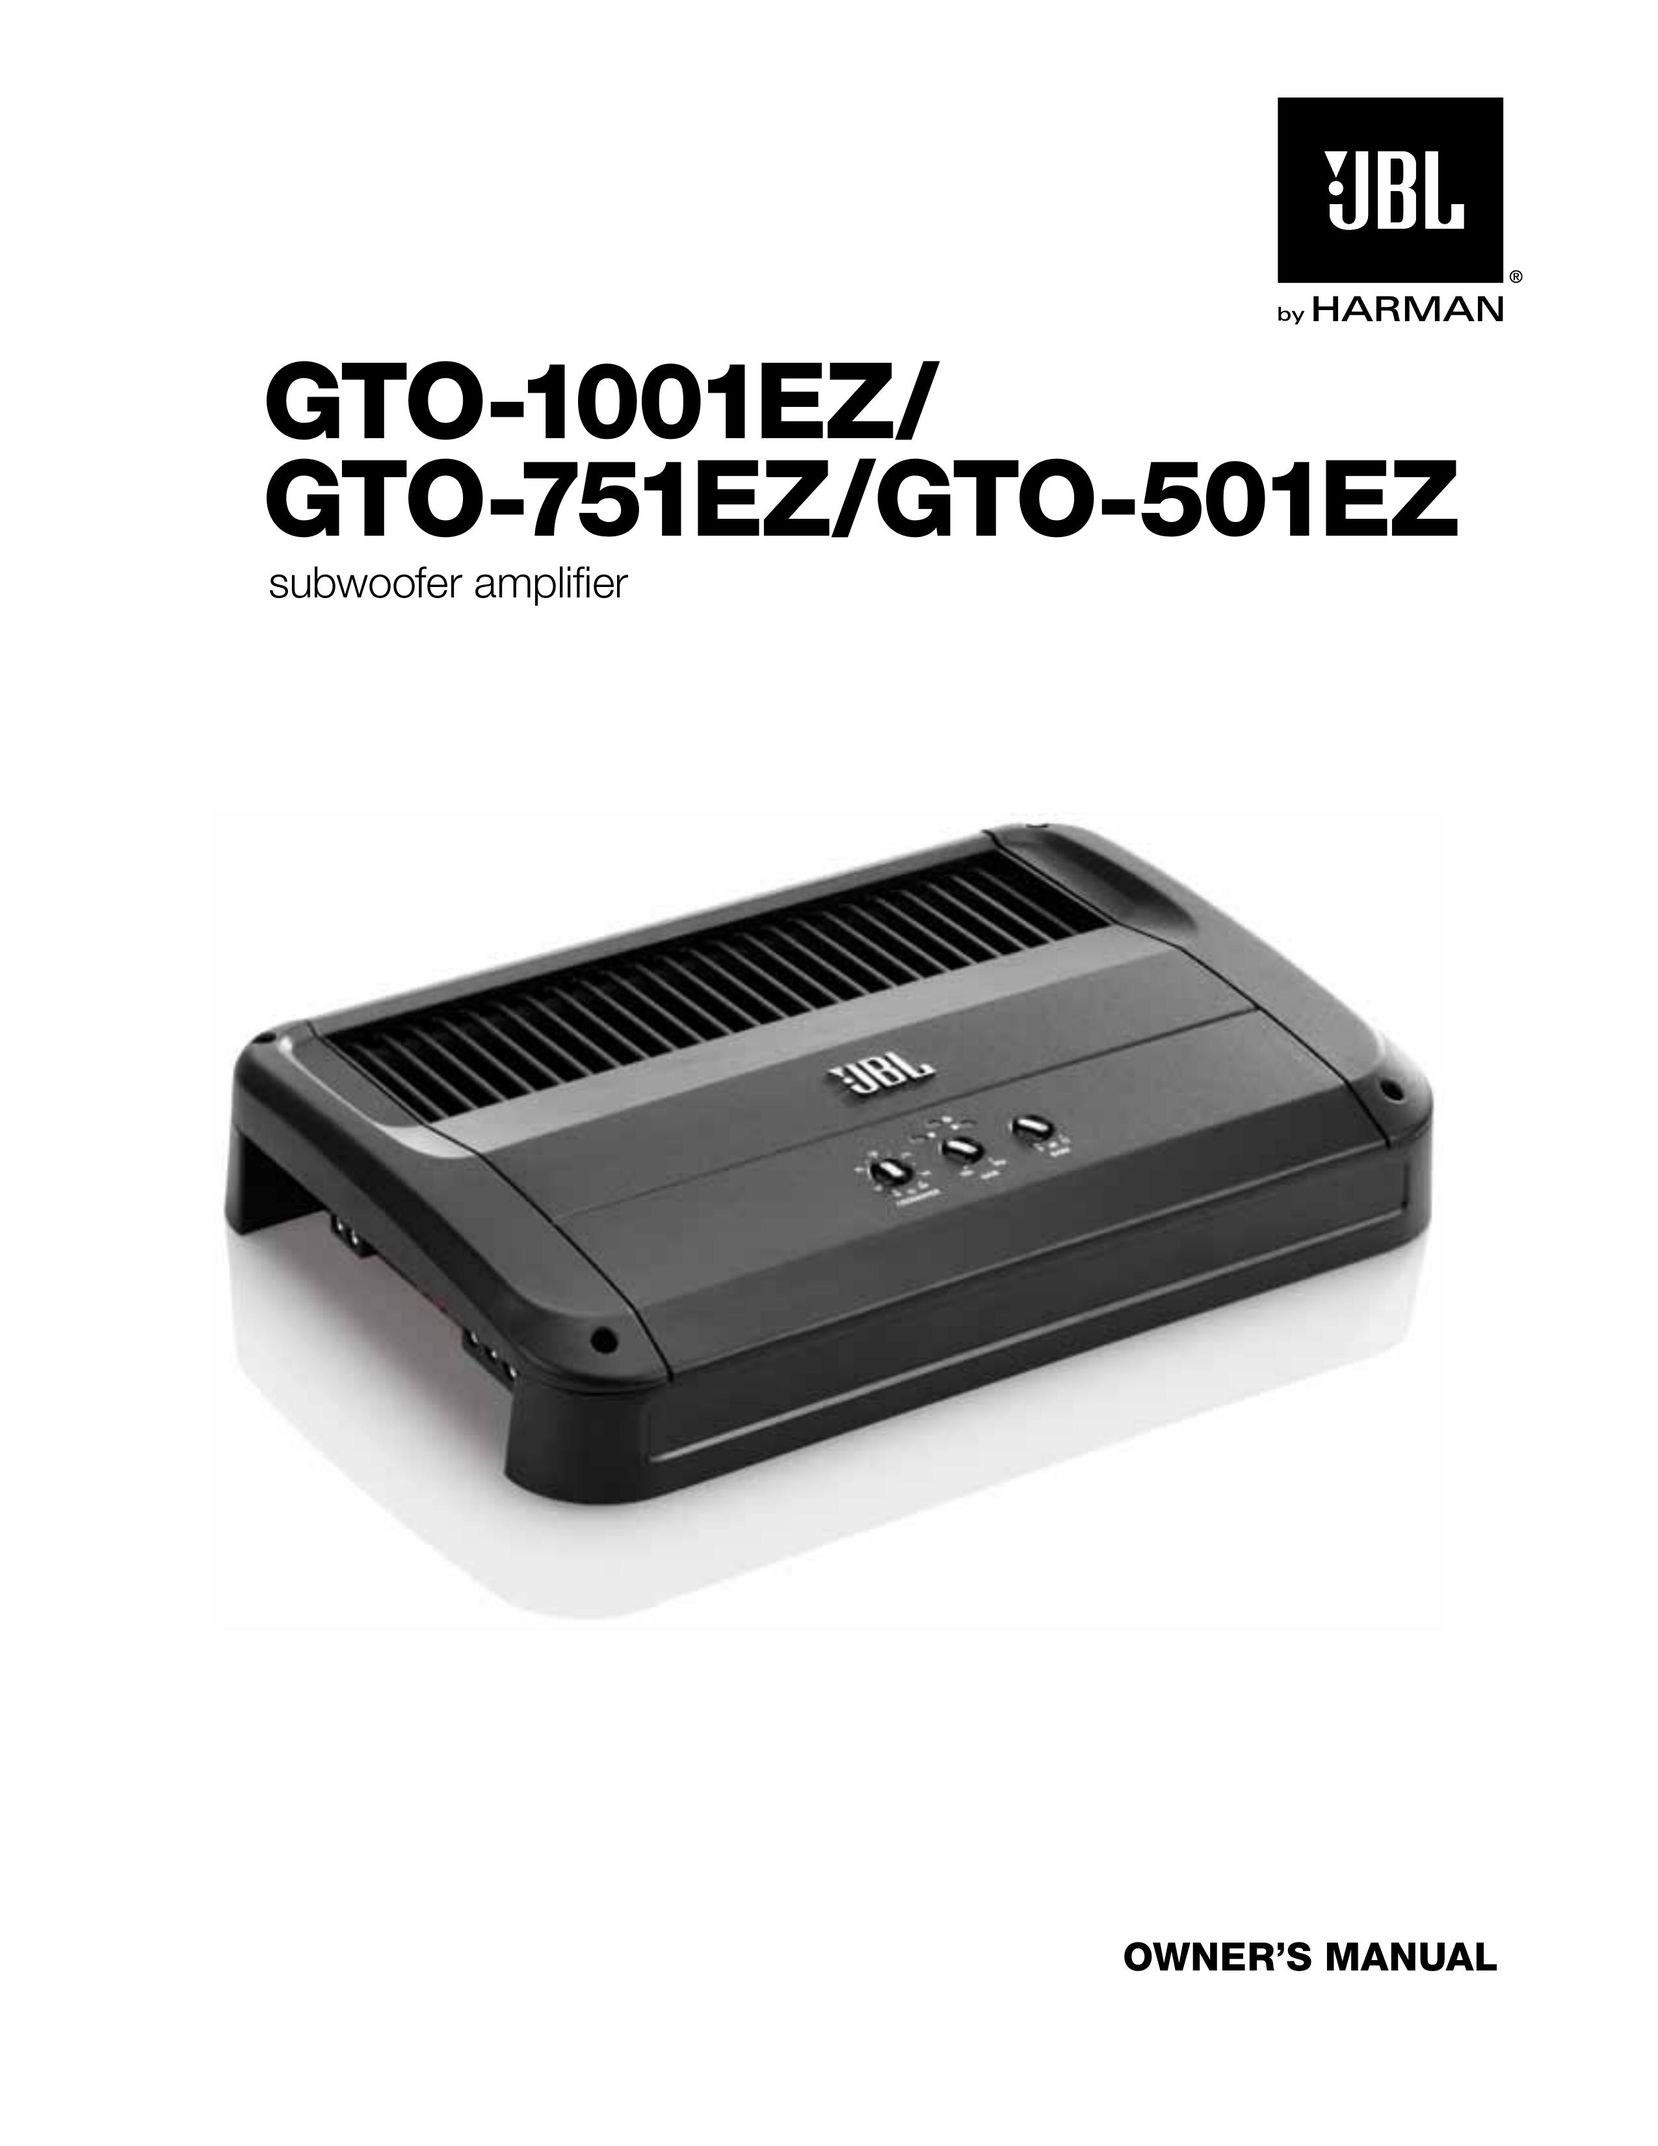 JBL GTO-751EZ Stereo Amplifier User Manual